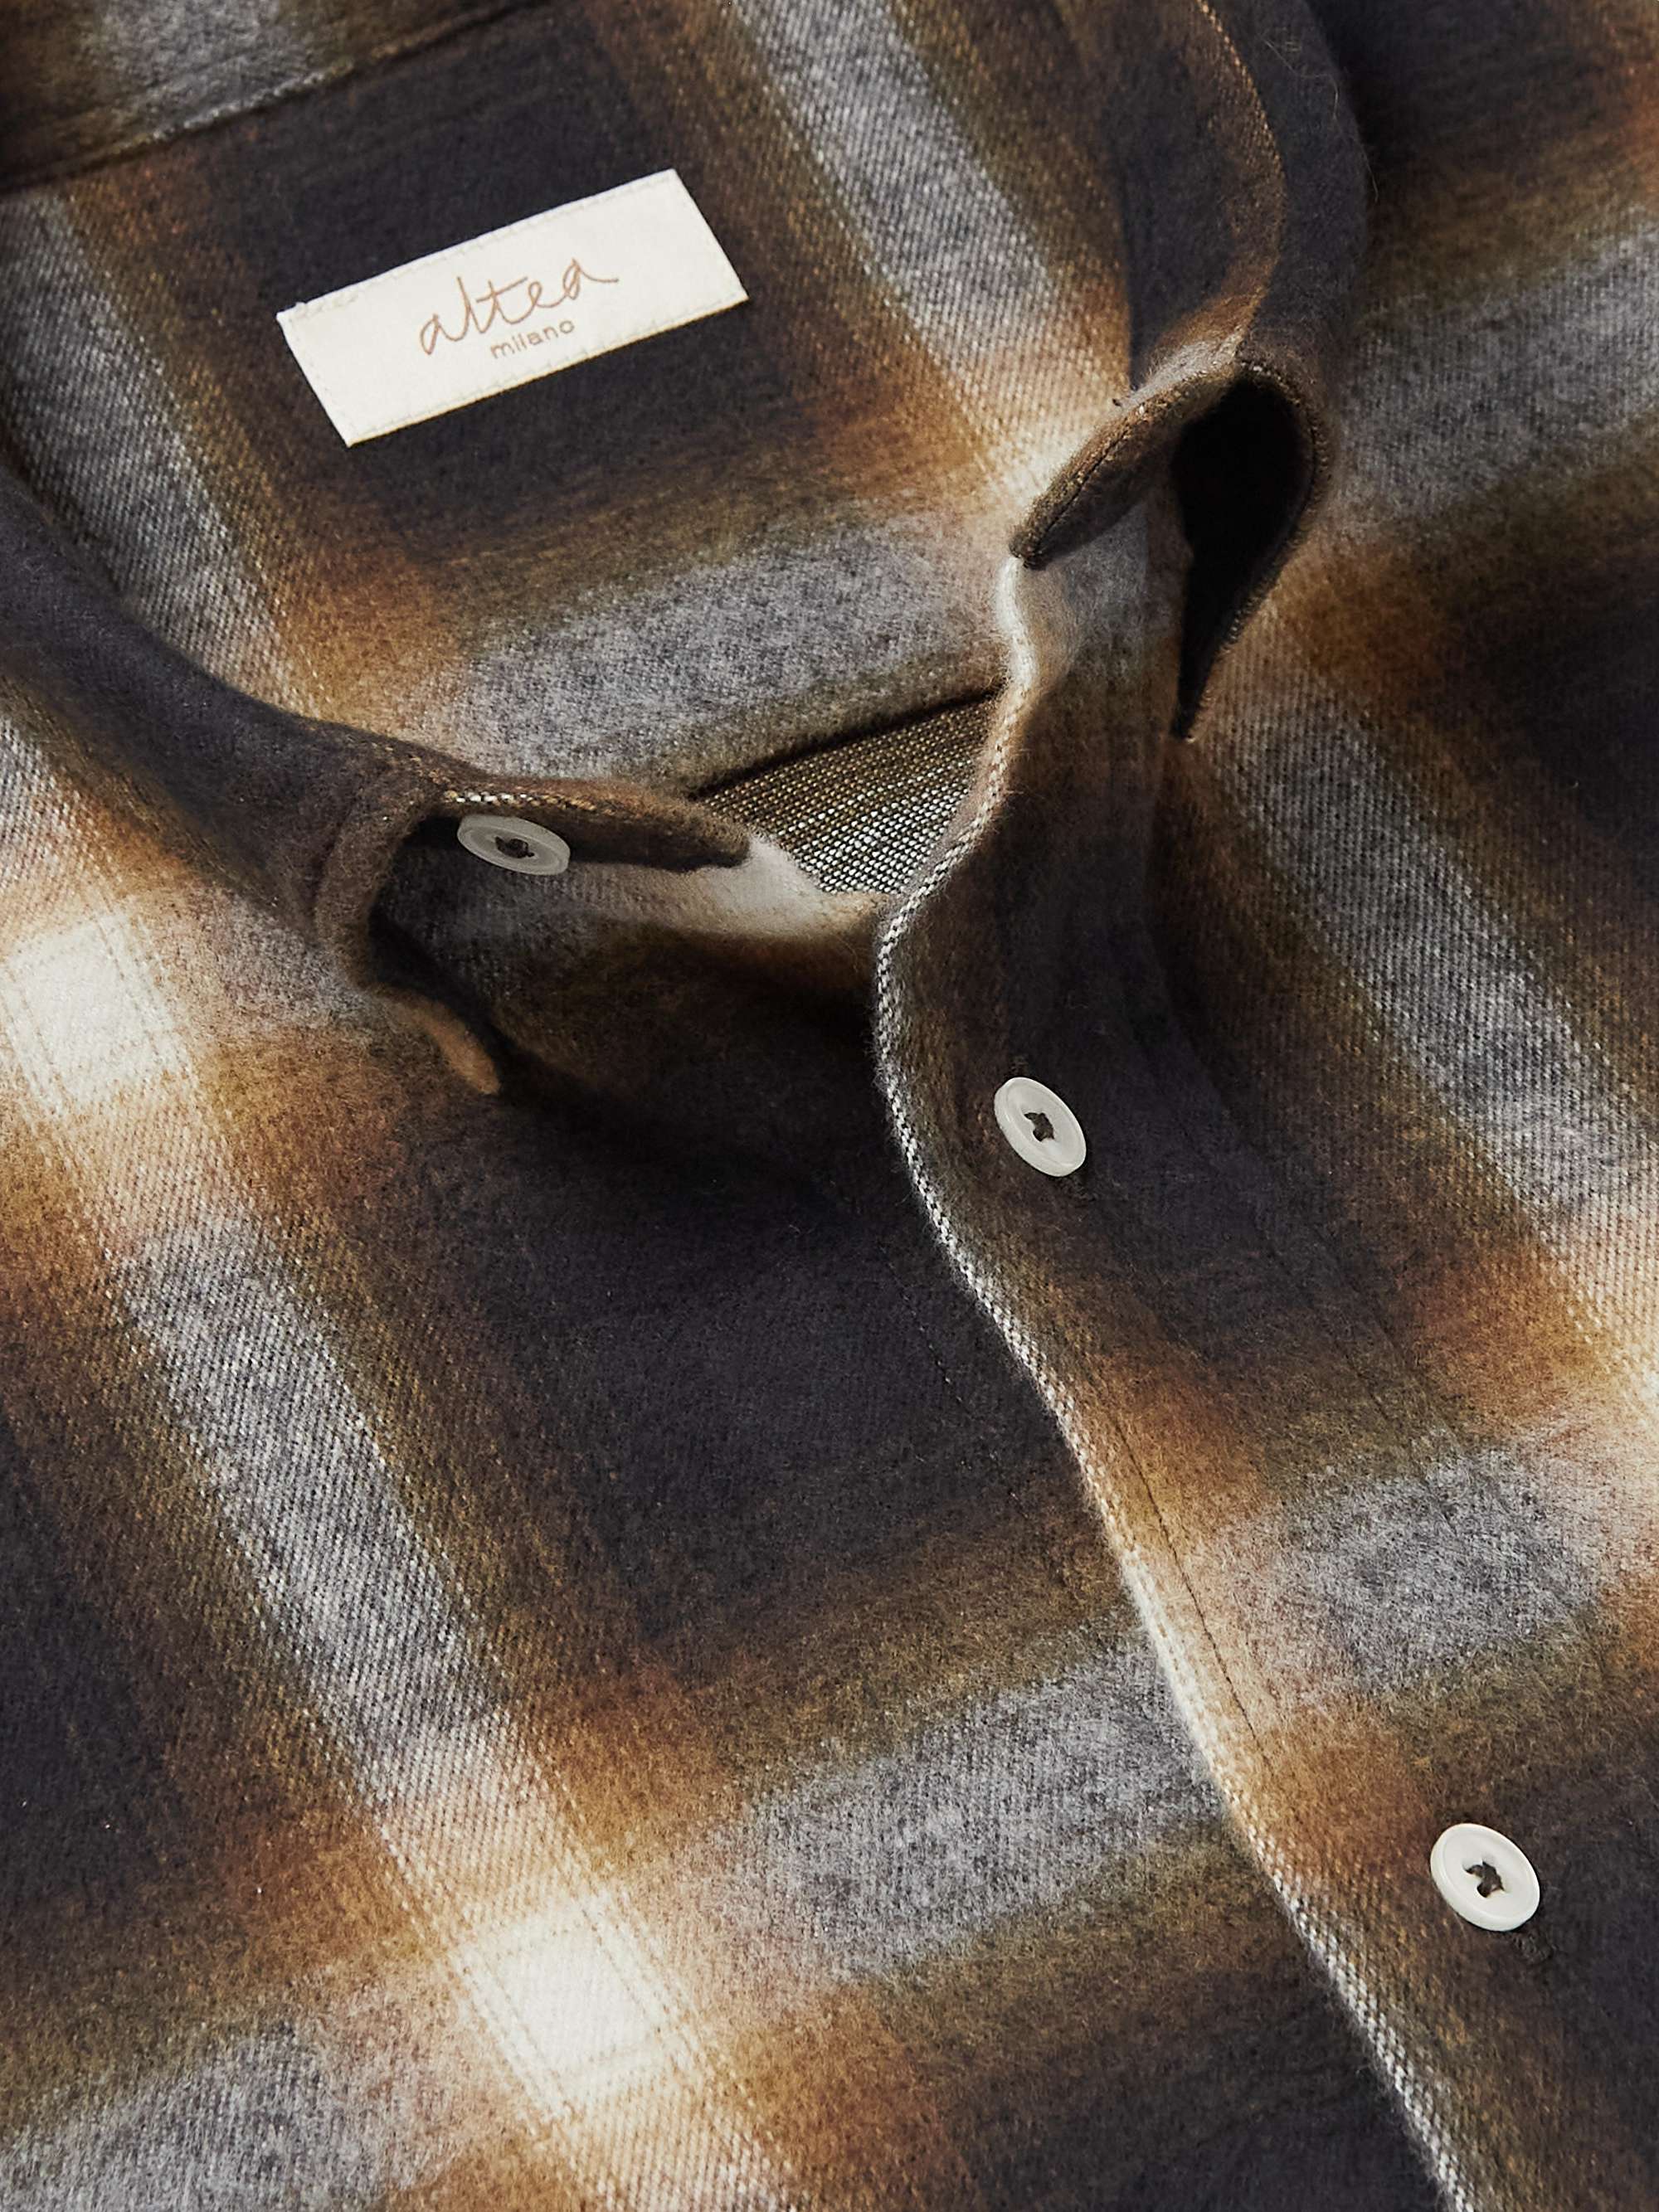 ALTEA Foster Checked Cotton-Flannel Shirt